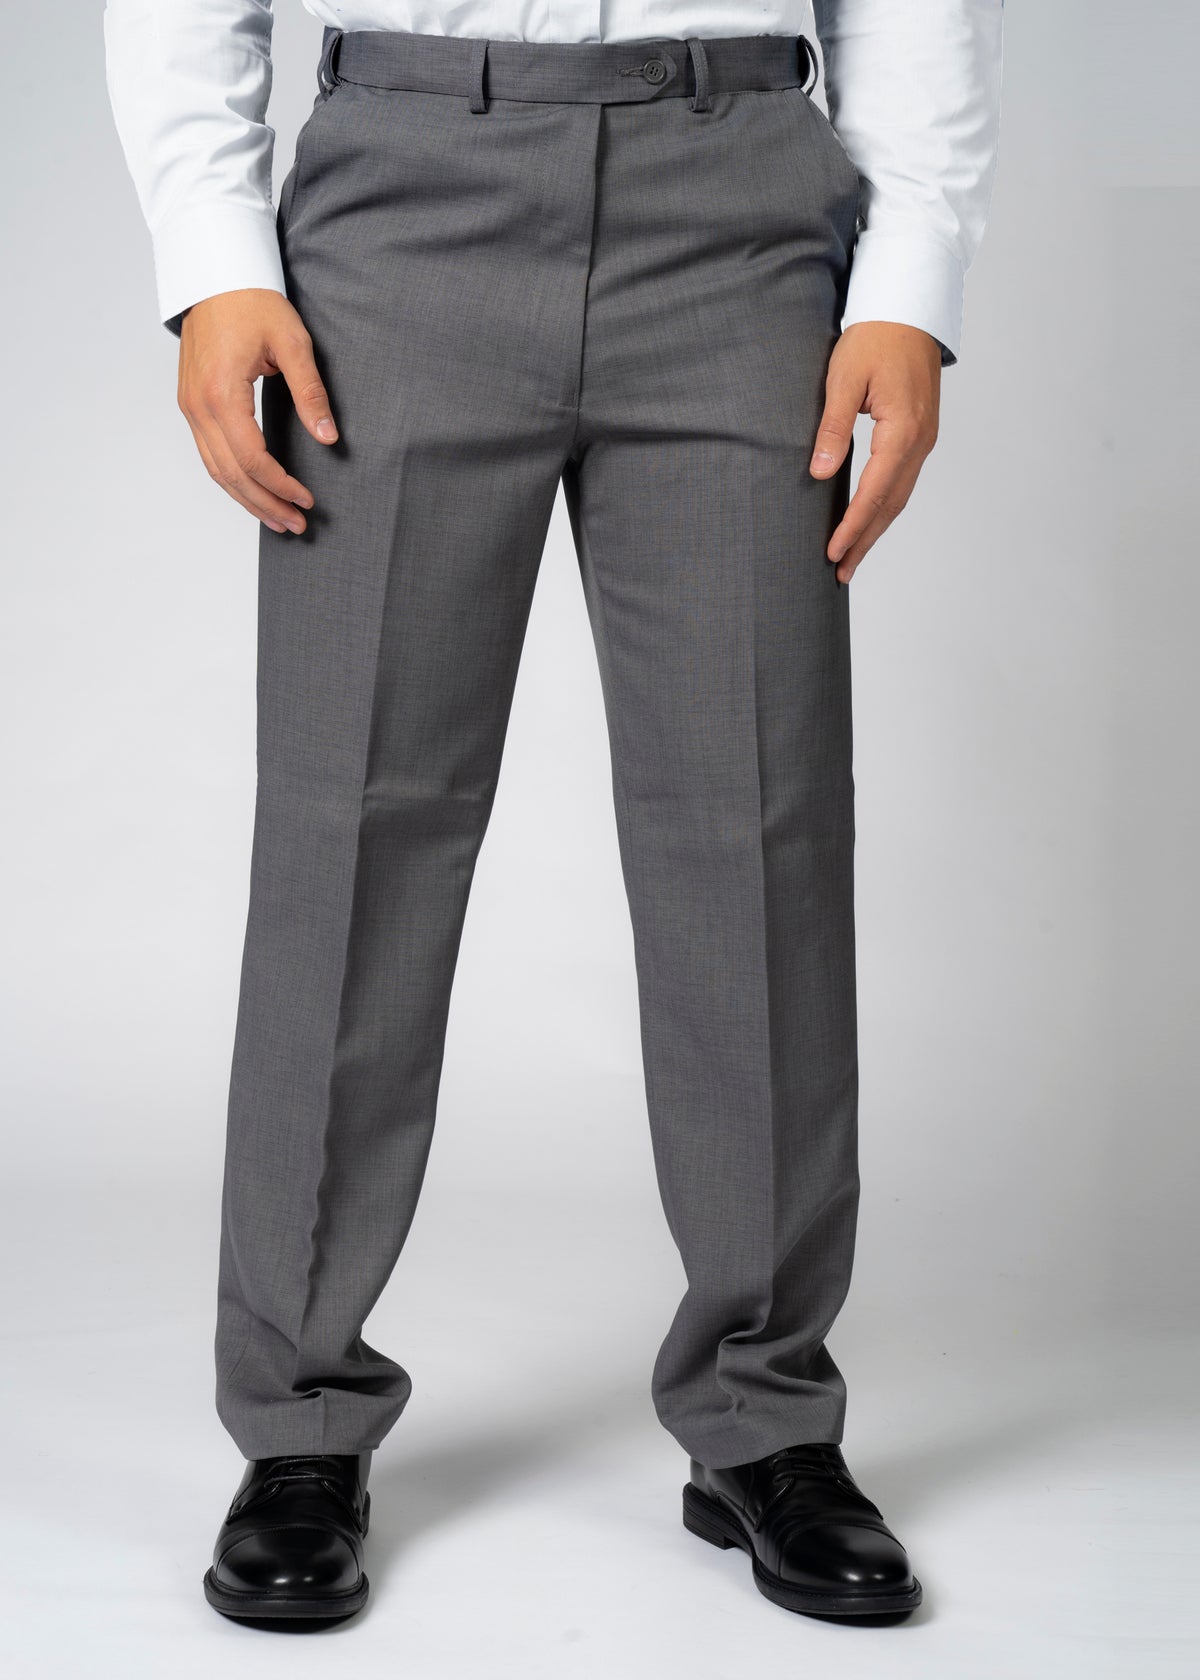 Blake smart trousers - mid grey